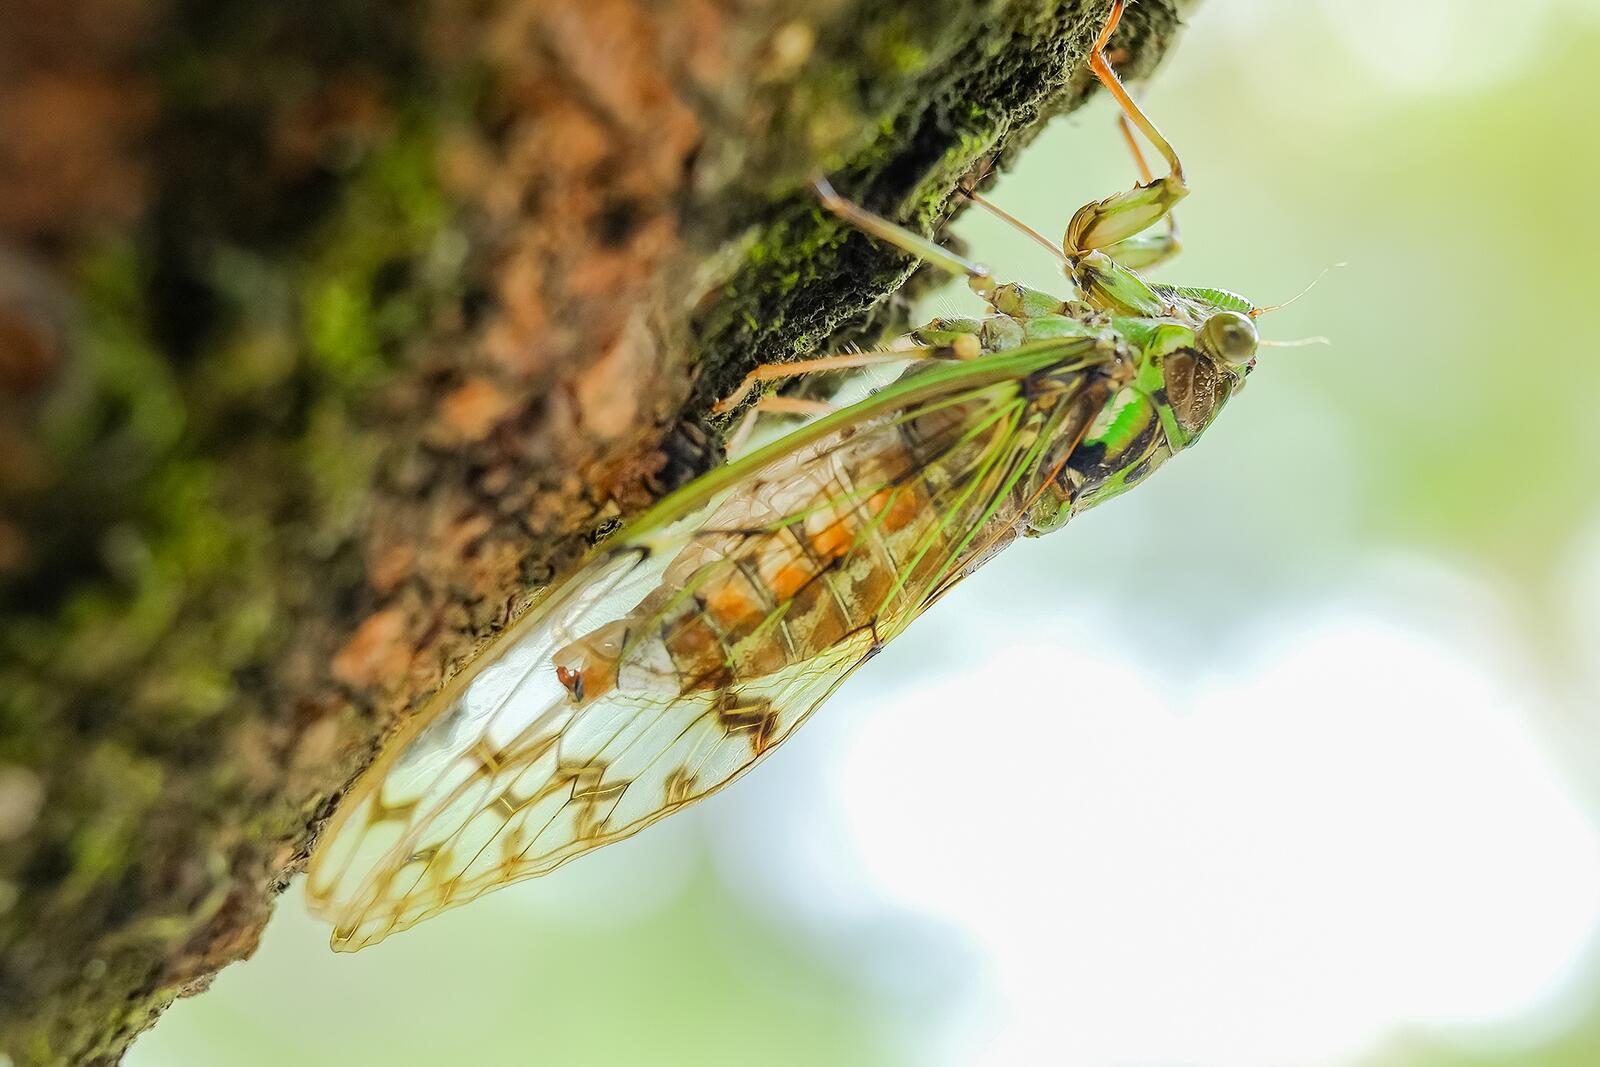 Wallpapers cicada photos invertebrate on the desktop